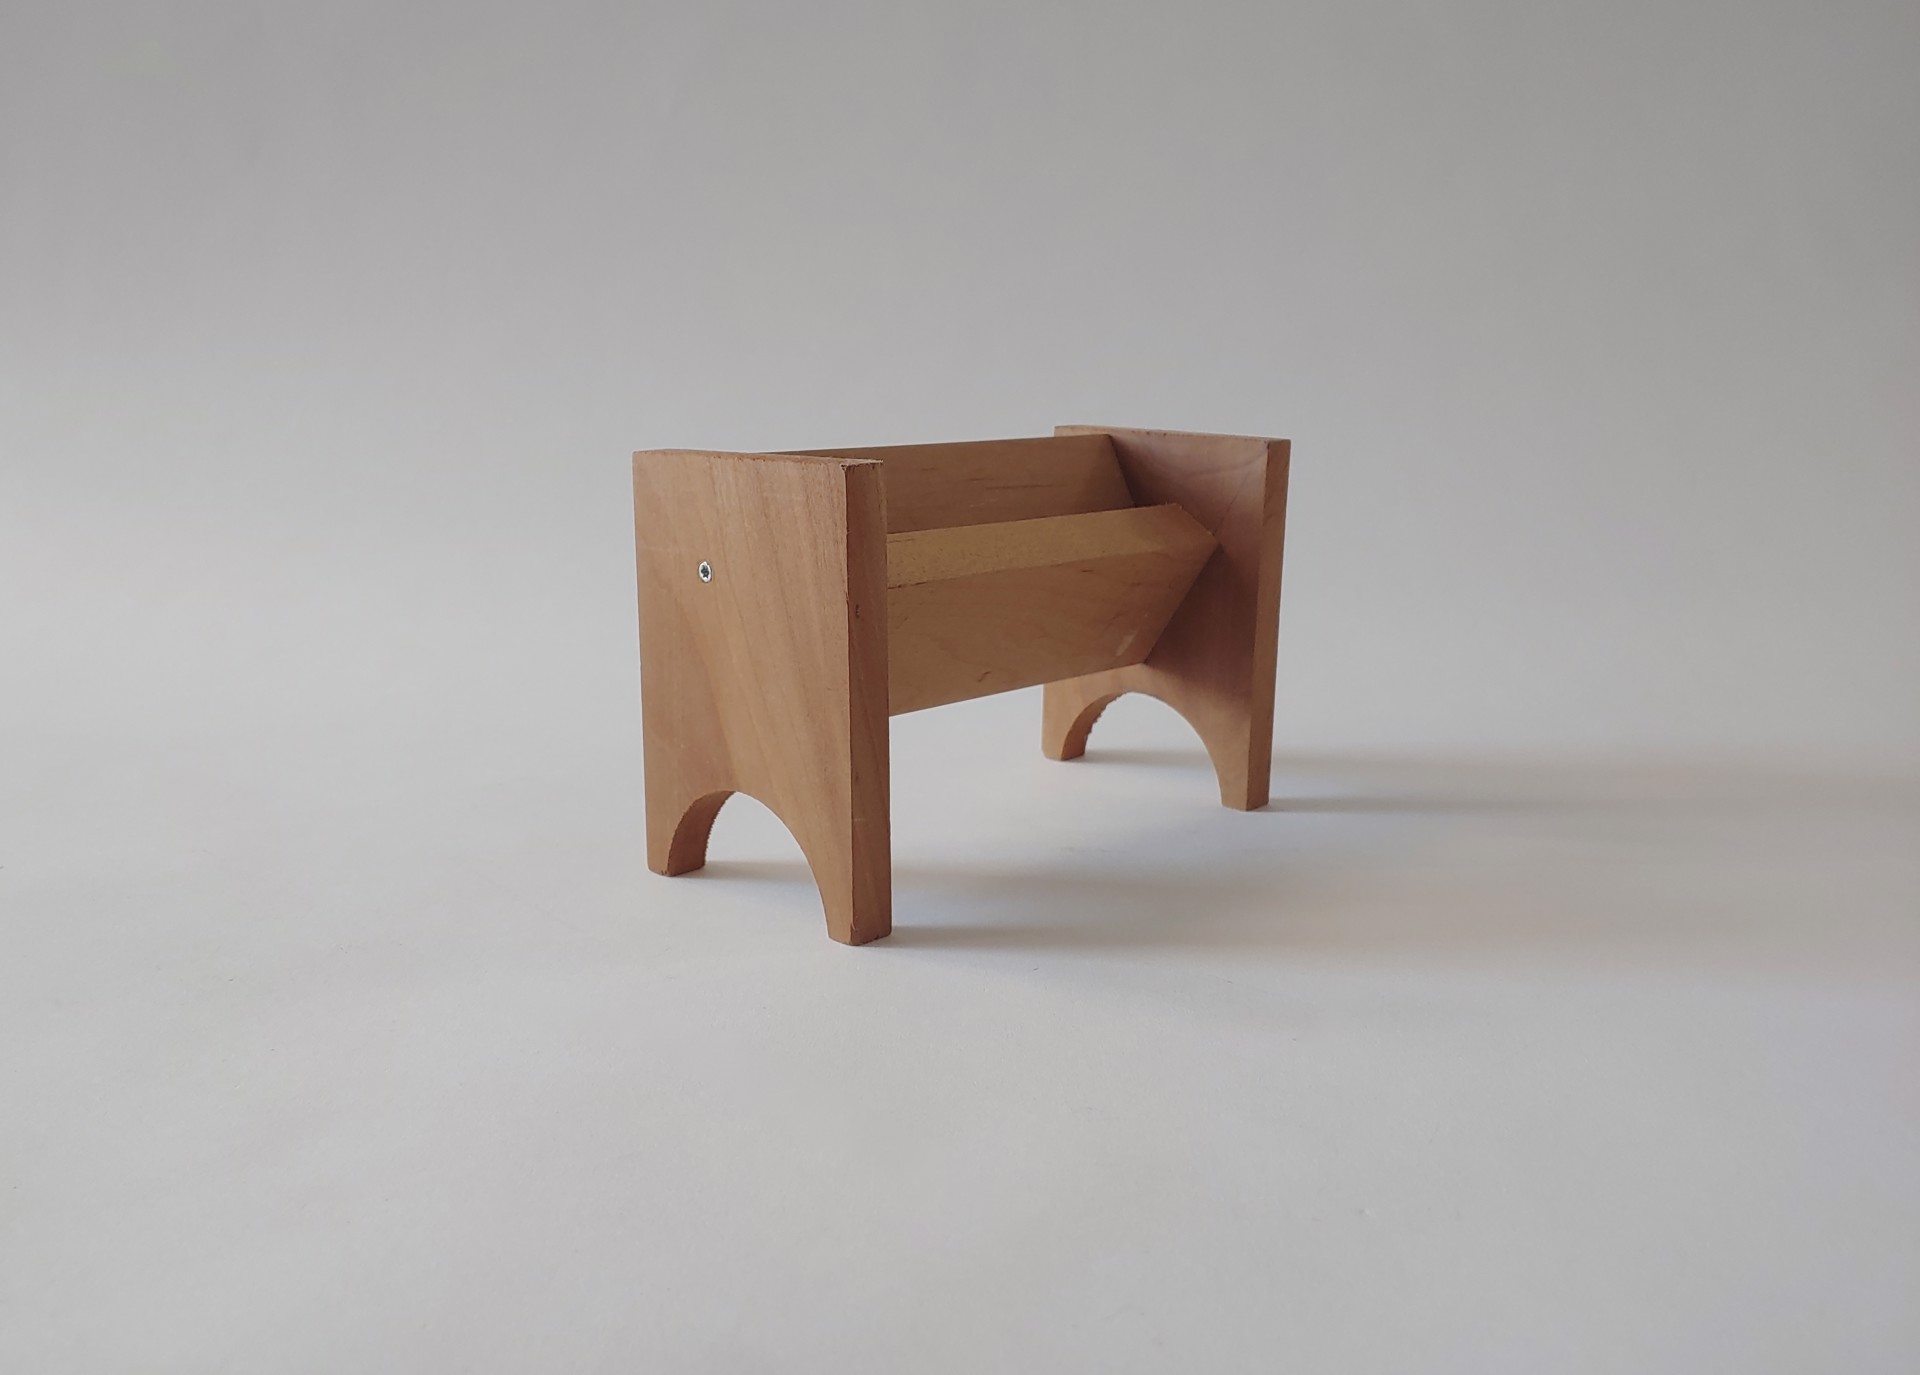 Art Stand - Wood Sculpture/Furniture by David Amdur